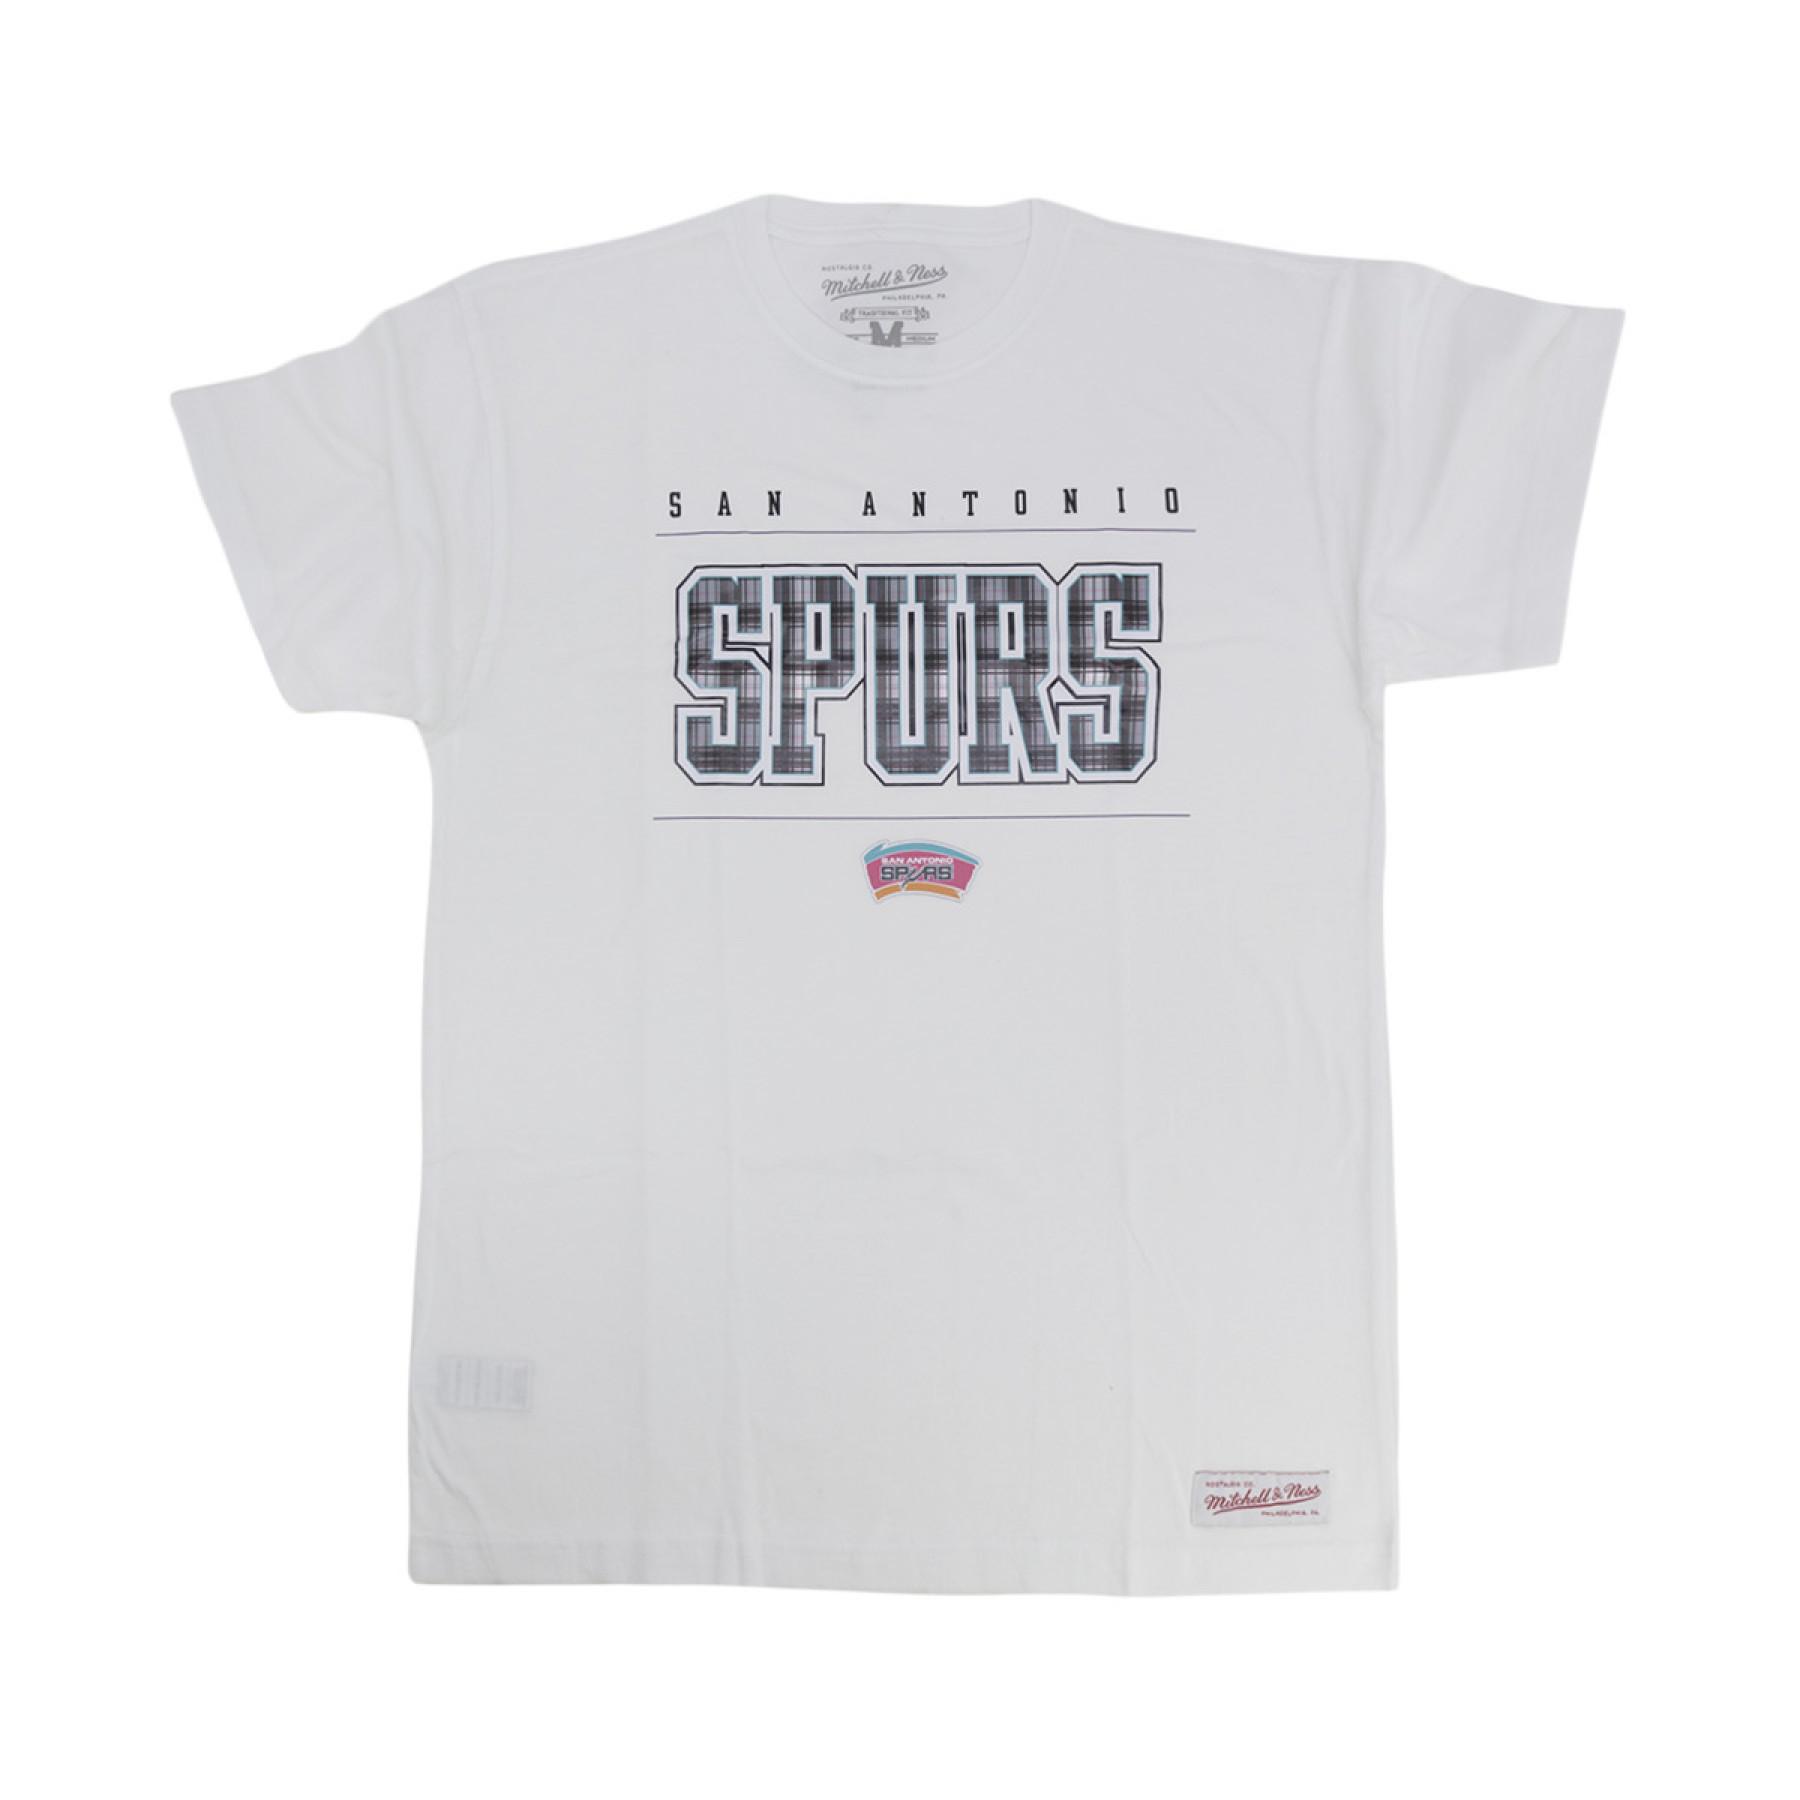 T-shirt San Antonio Spurs private school team